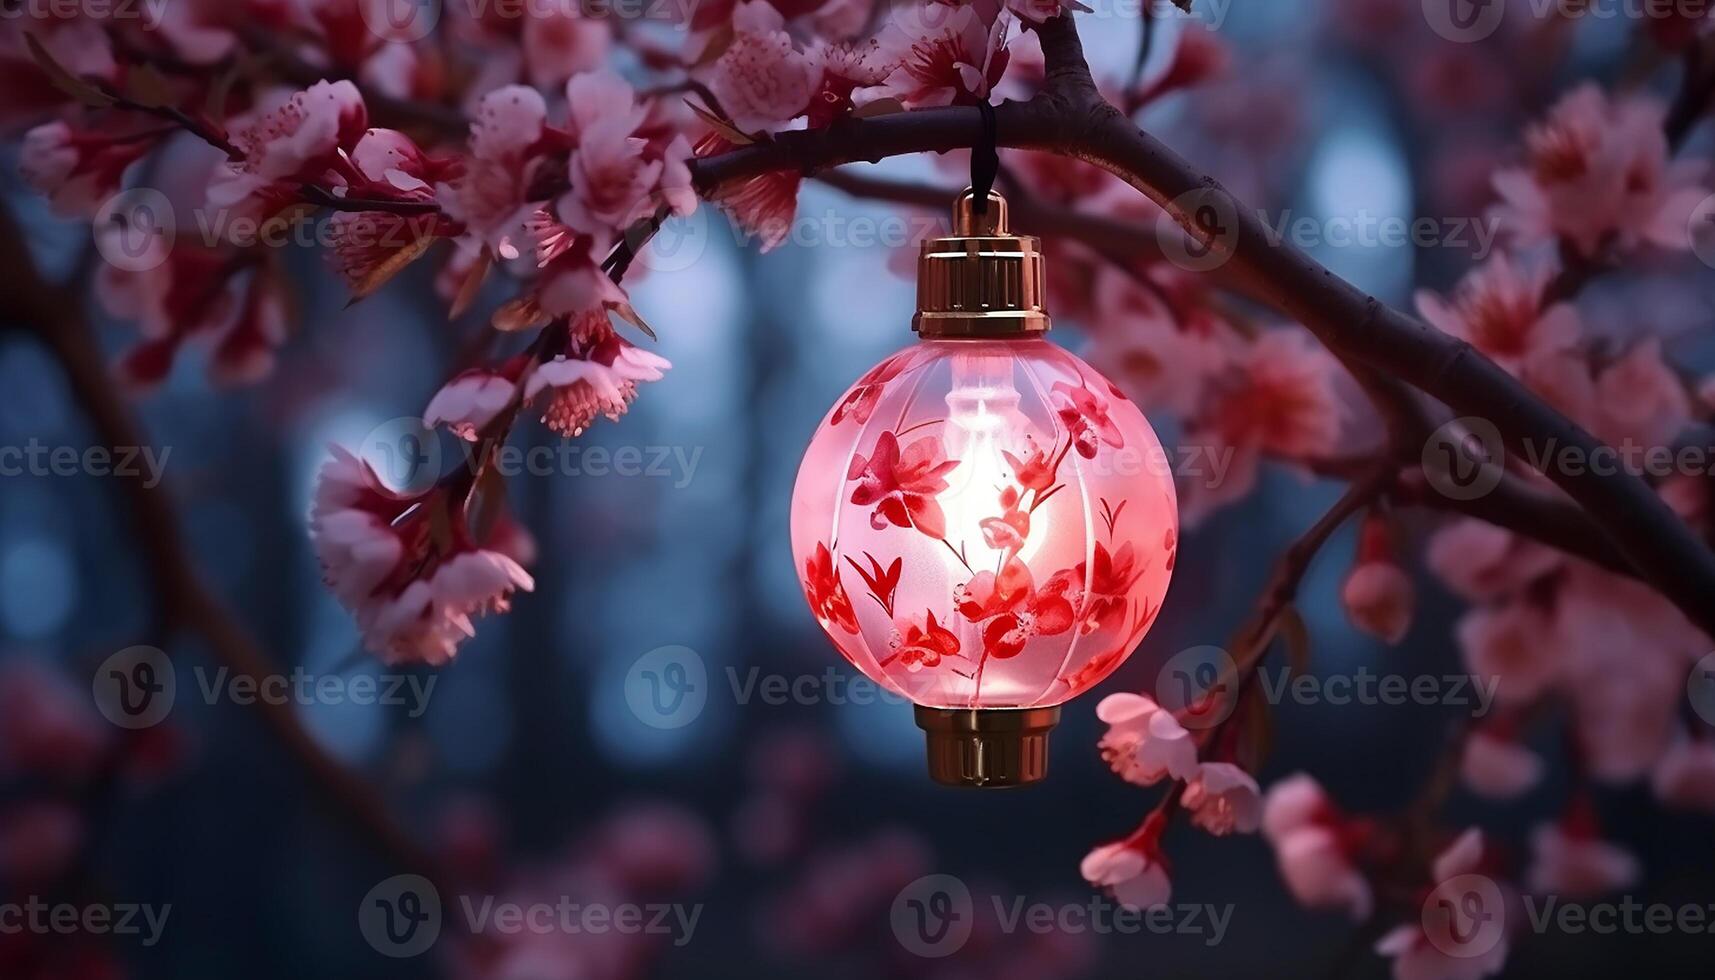 AI generated Glowing lantern illuminates winter night, symbolizing traditional Christmas celebration generated by AI photo